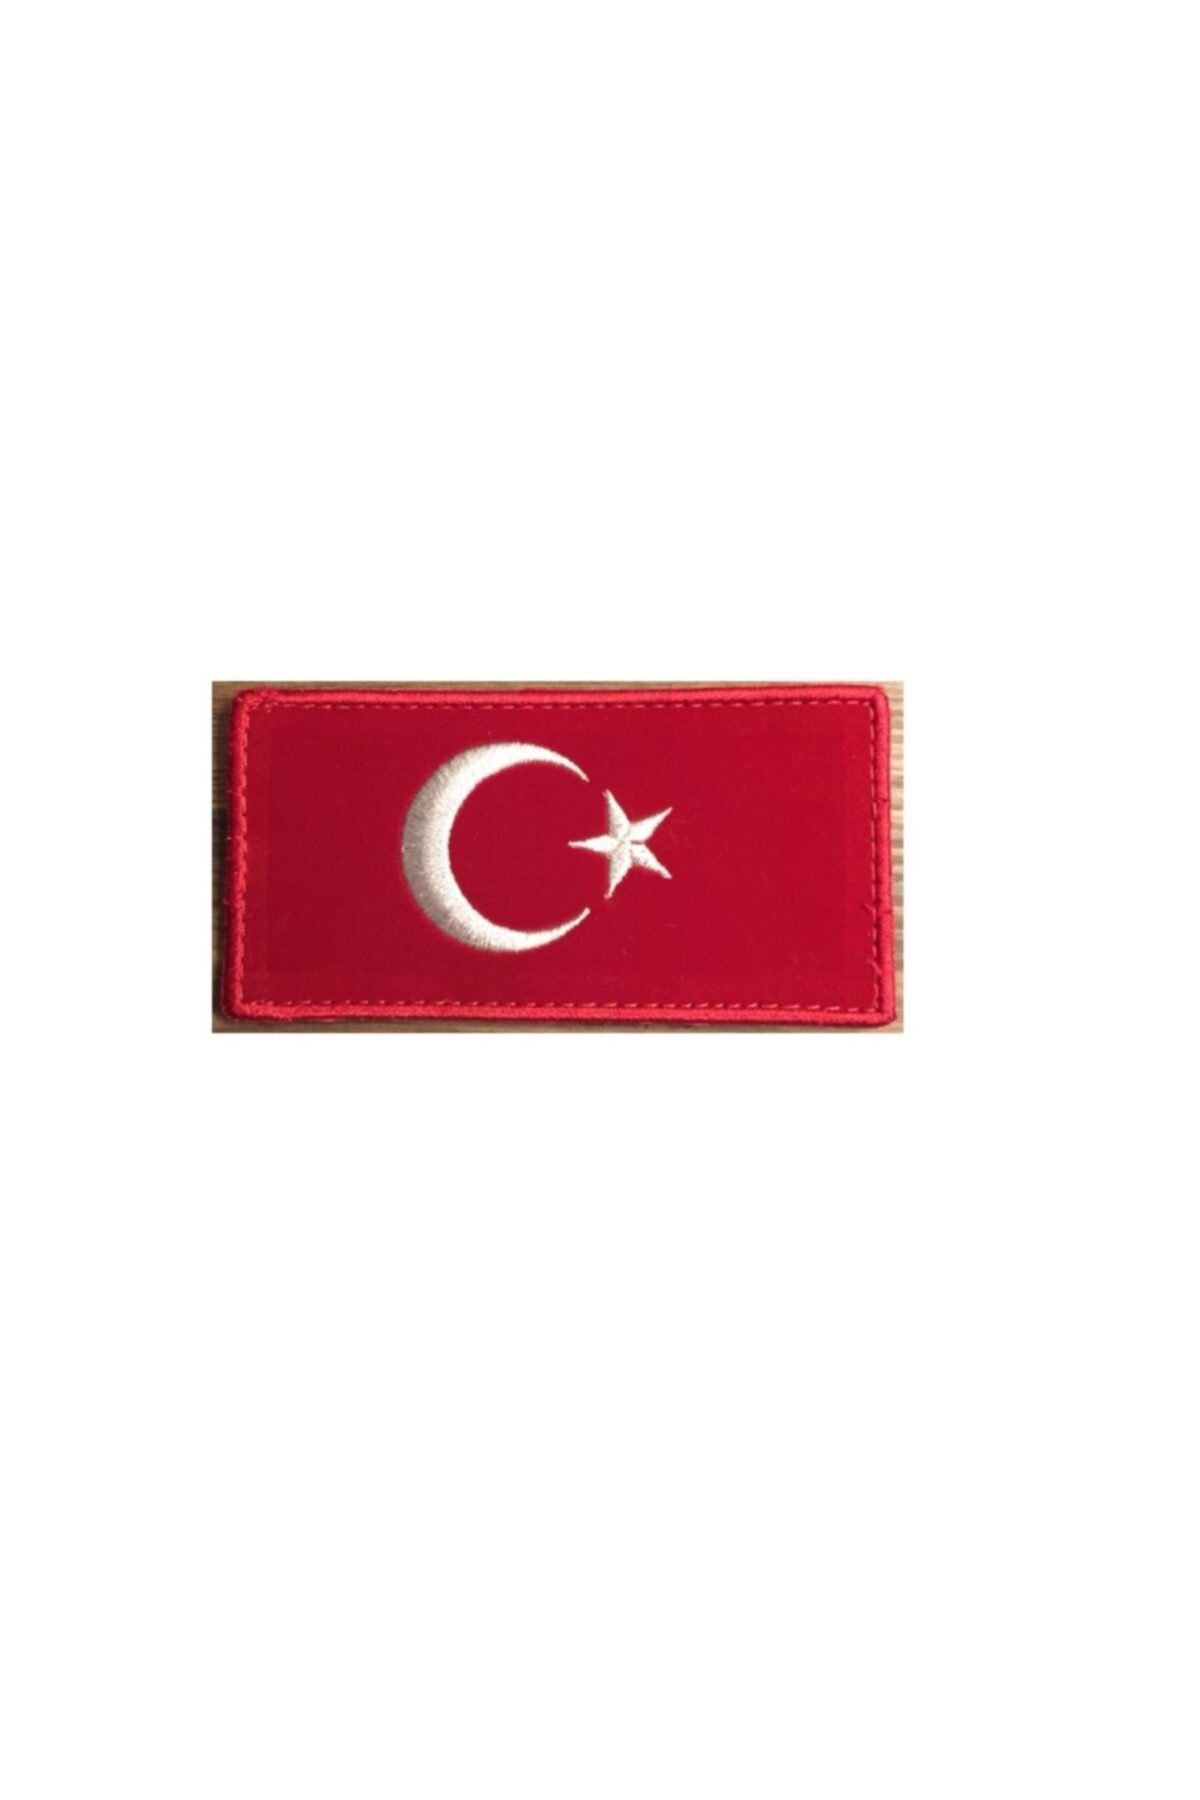 Gazi Ticaret Türk Bayrağı - Bayrak 12x6cm.patches,patch,peç,arma